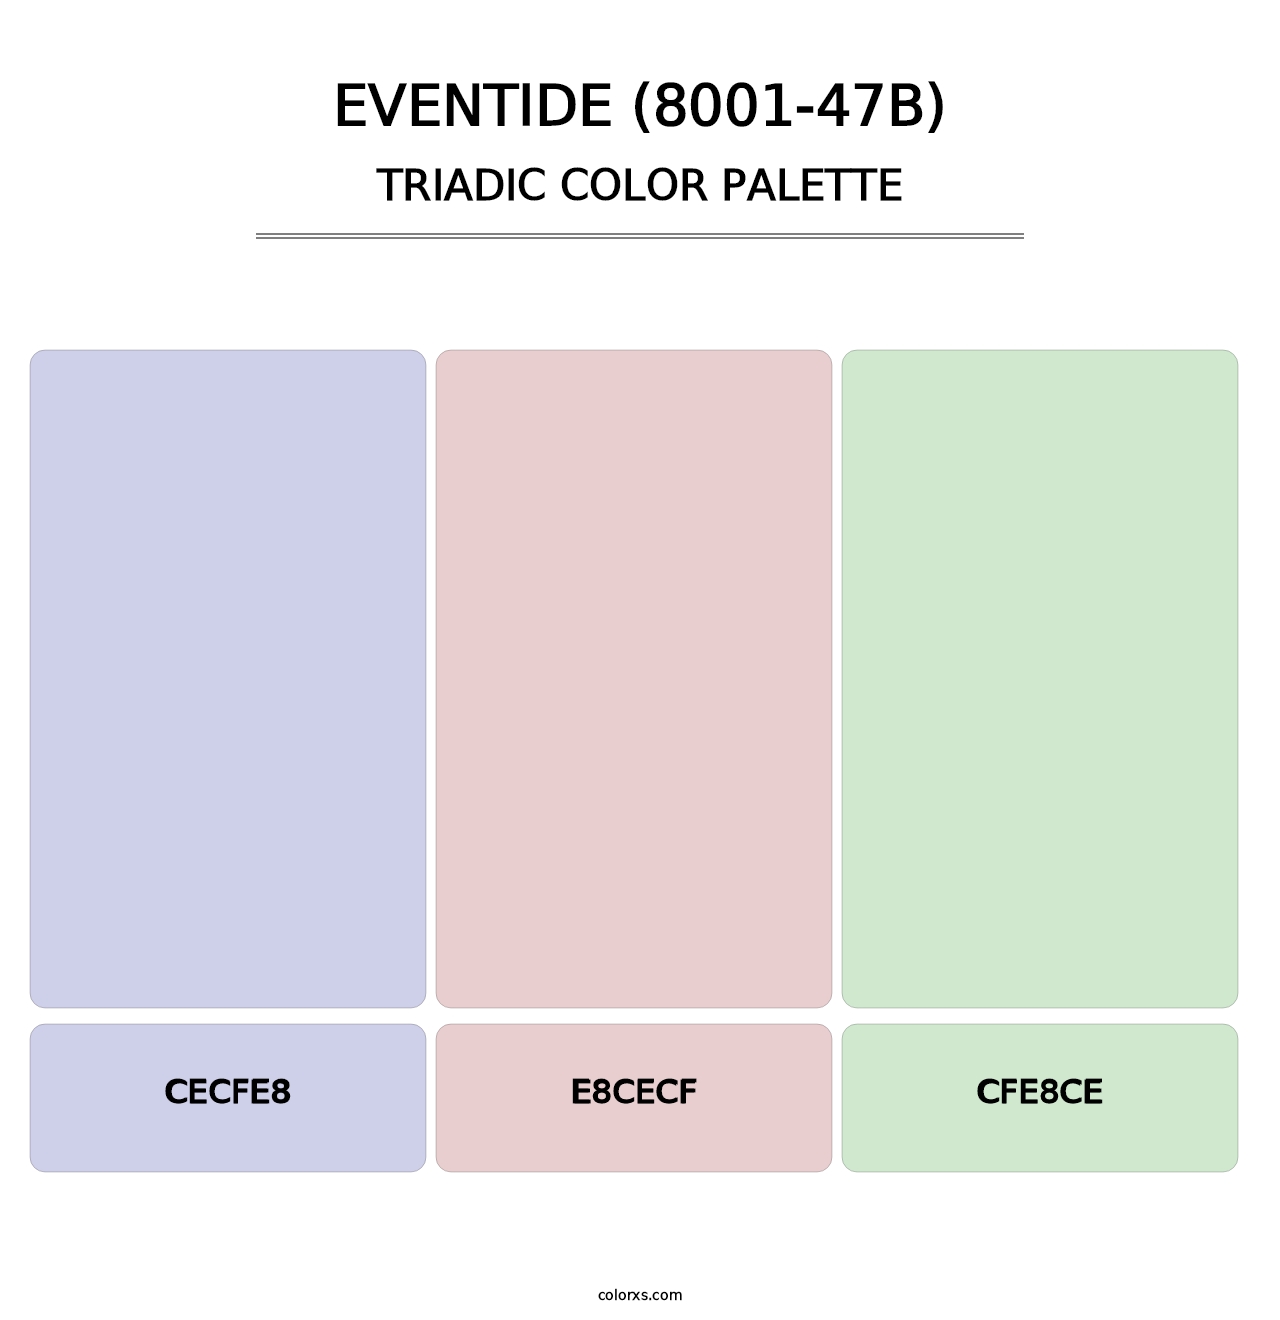 Eventide (8001-47B) - Triadic Color Palette